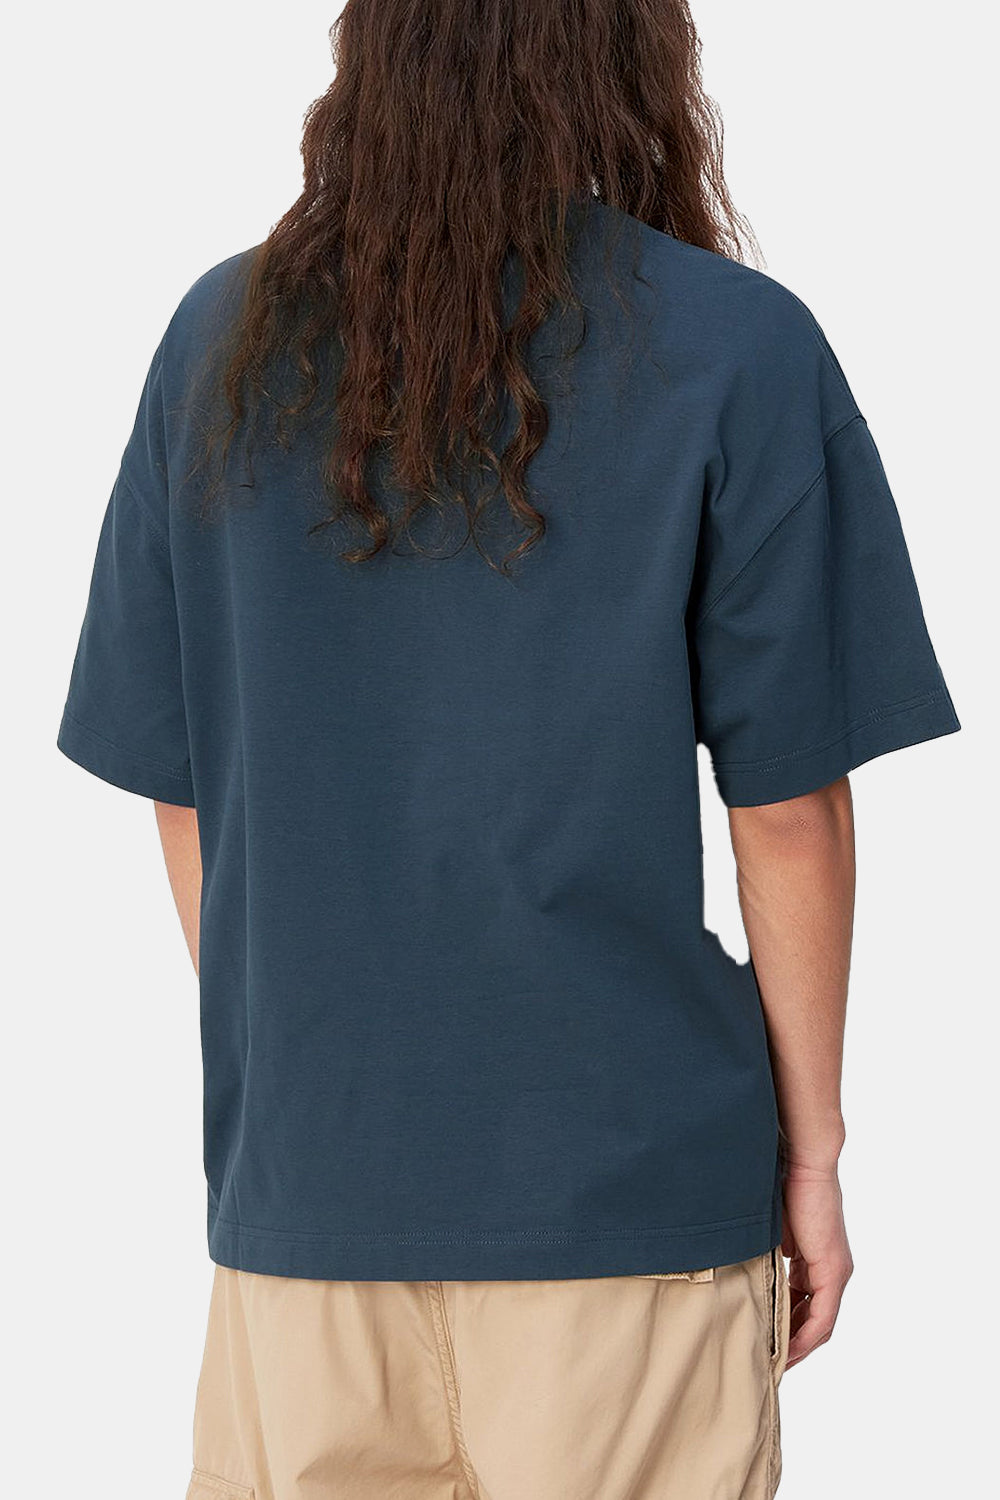 Carhartt Short Sleeve Script T-Shirt (Blue/White)
